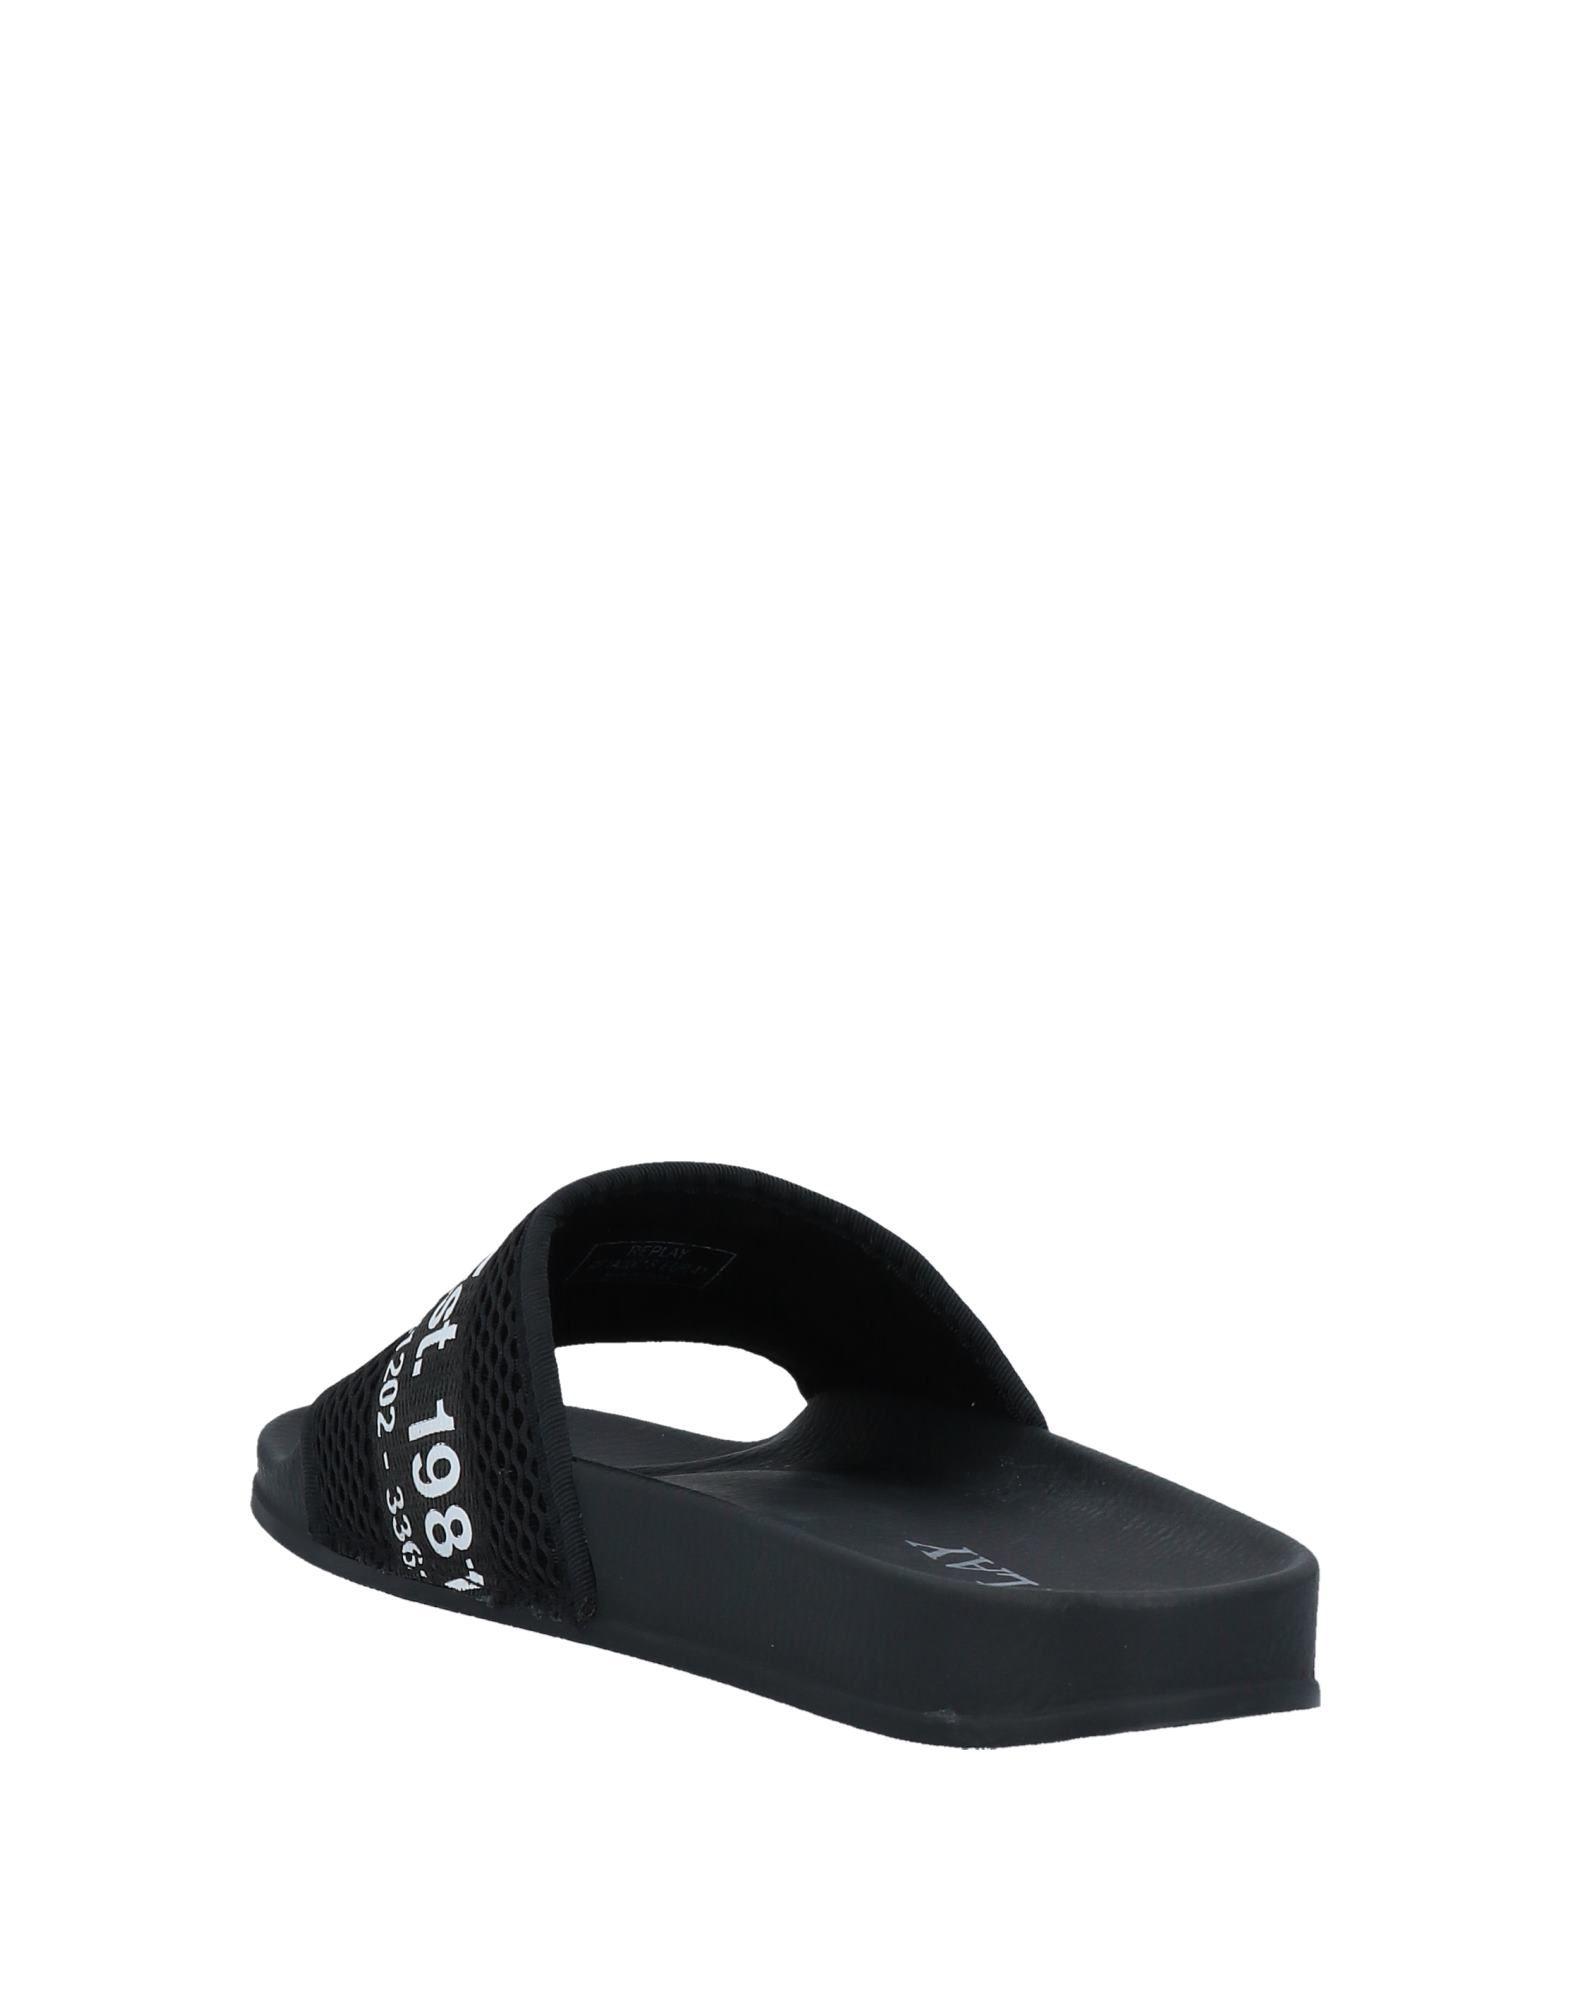 Replay Neoprene Sandals in Black for Men - Lyst